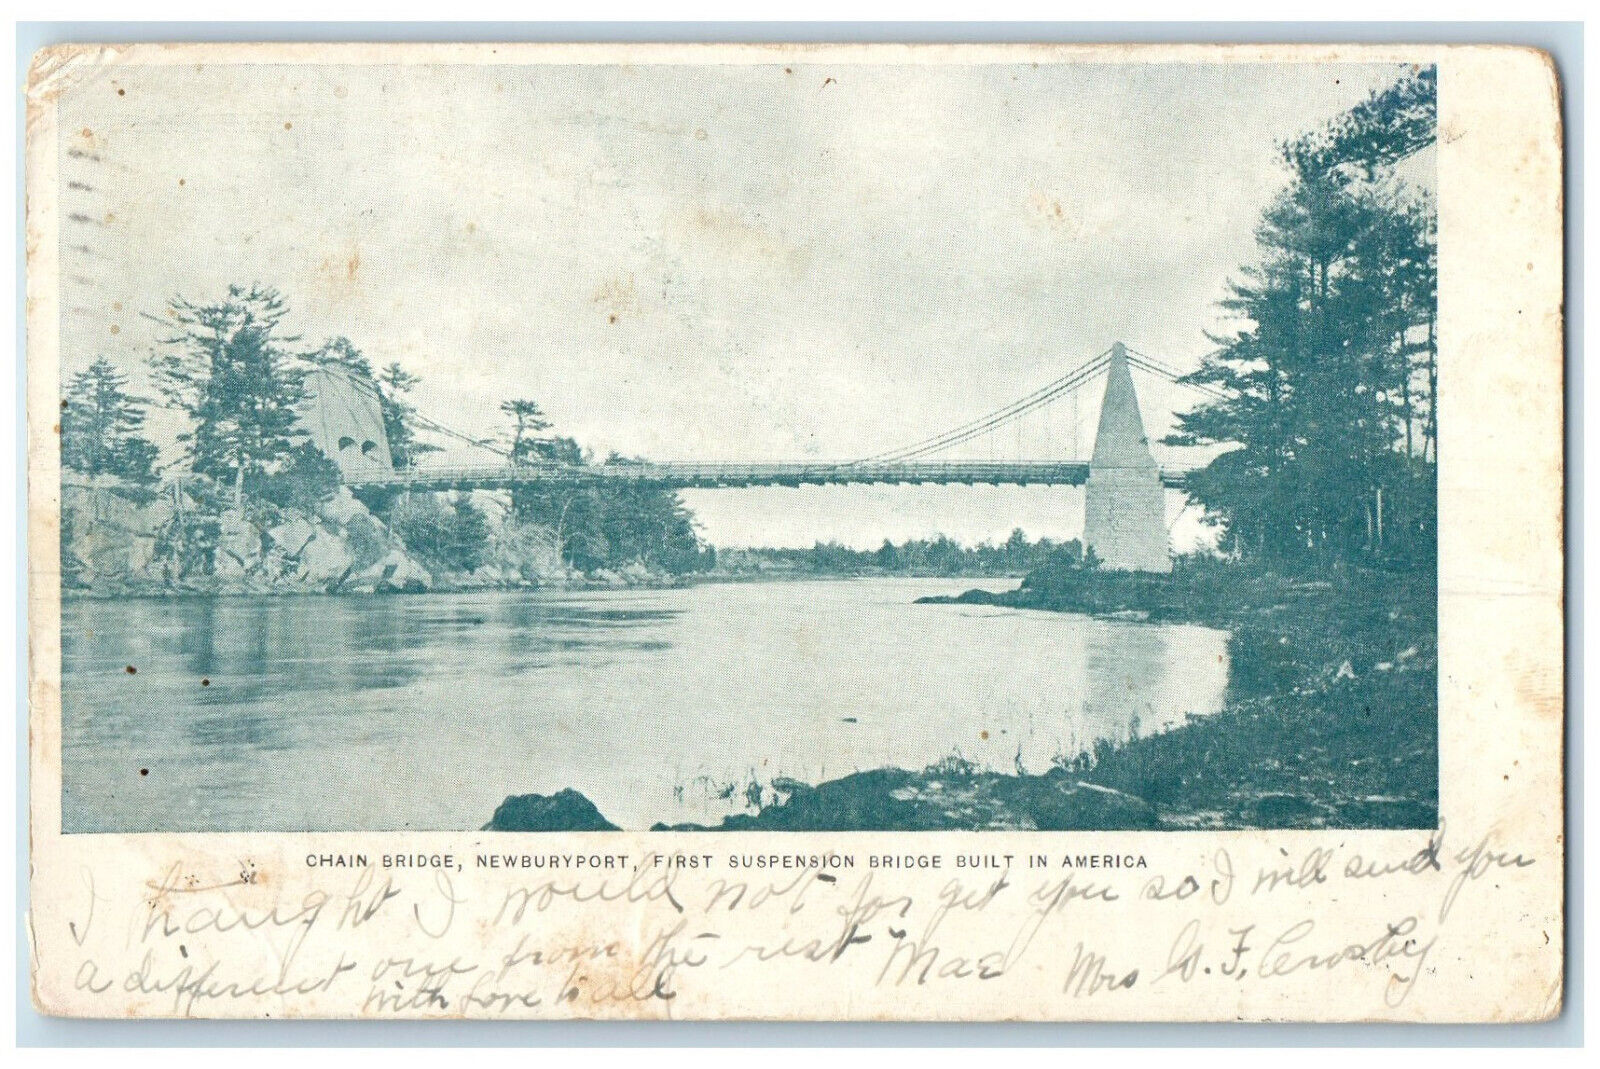 1905 Chain Bridge First Suspension Bridge Newburyport MA Winslow ME Postcard